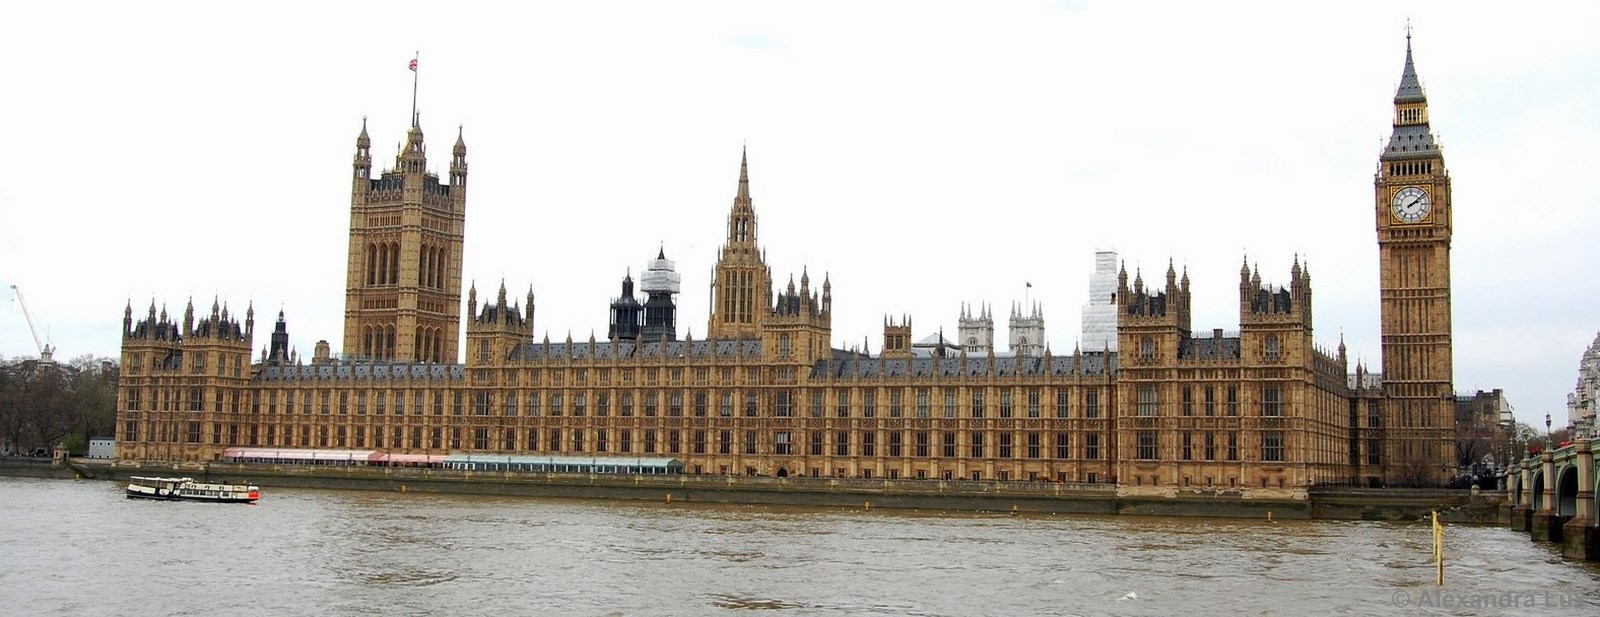 houses of parliament mit big ben